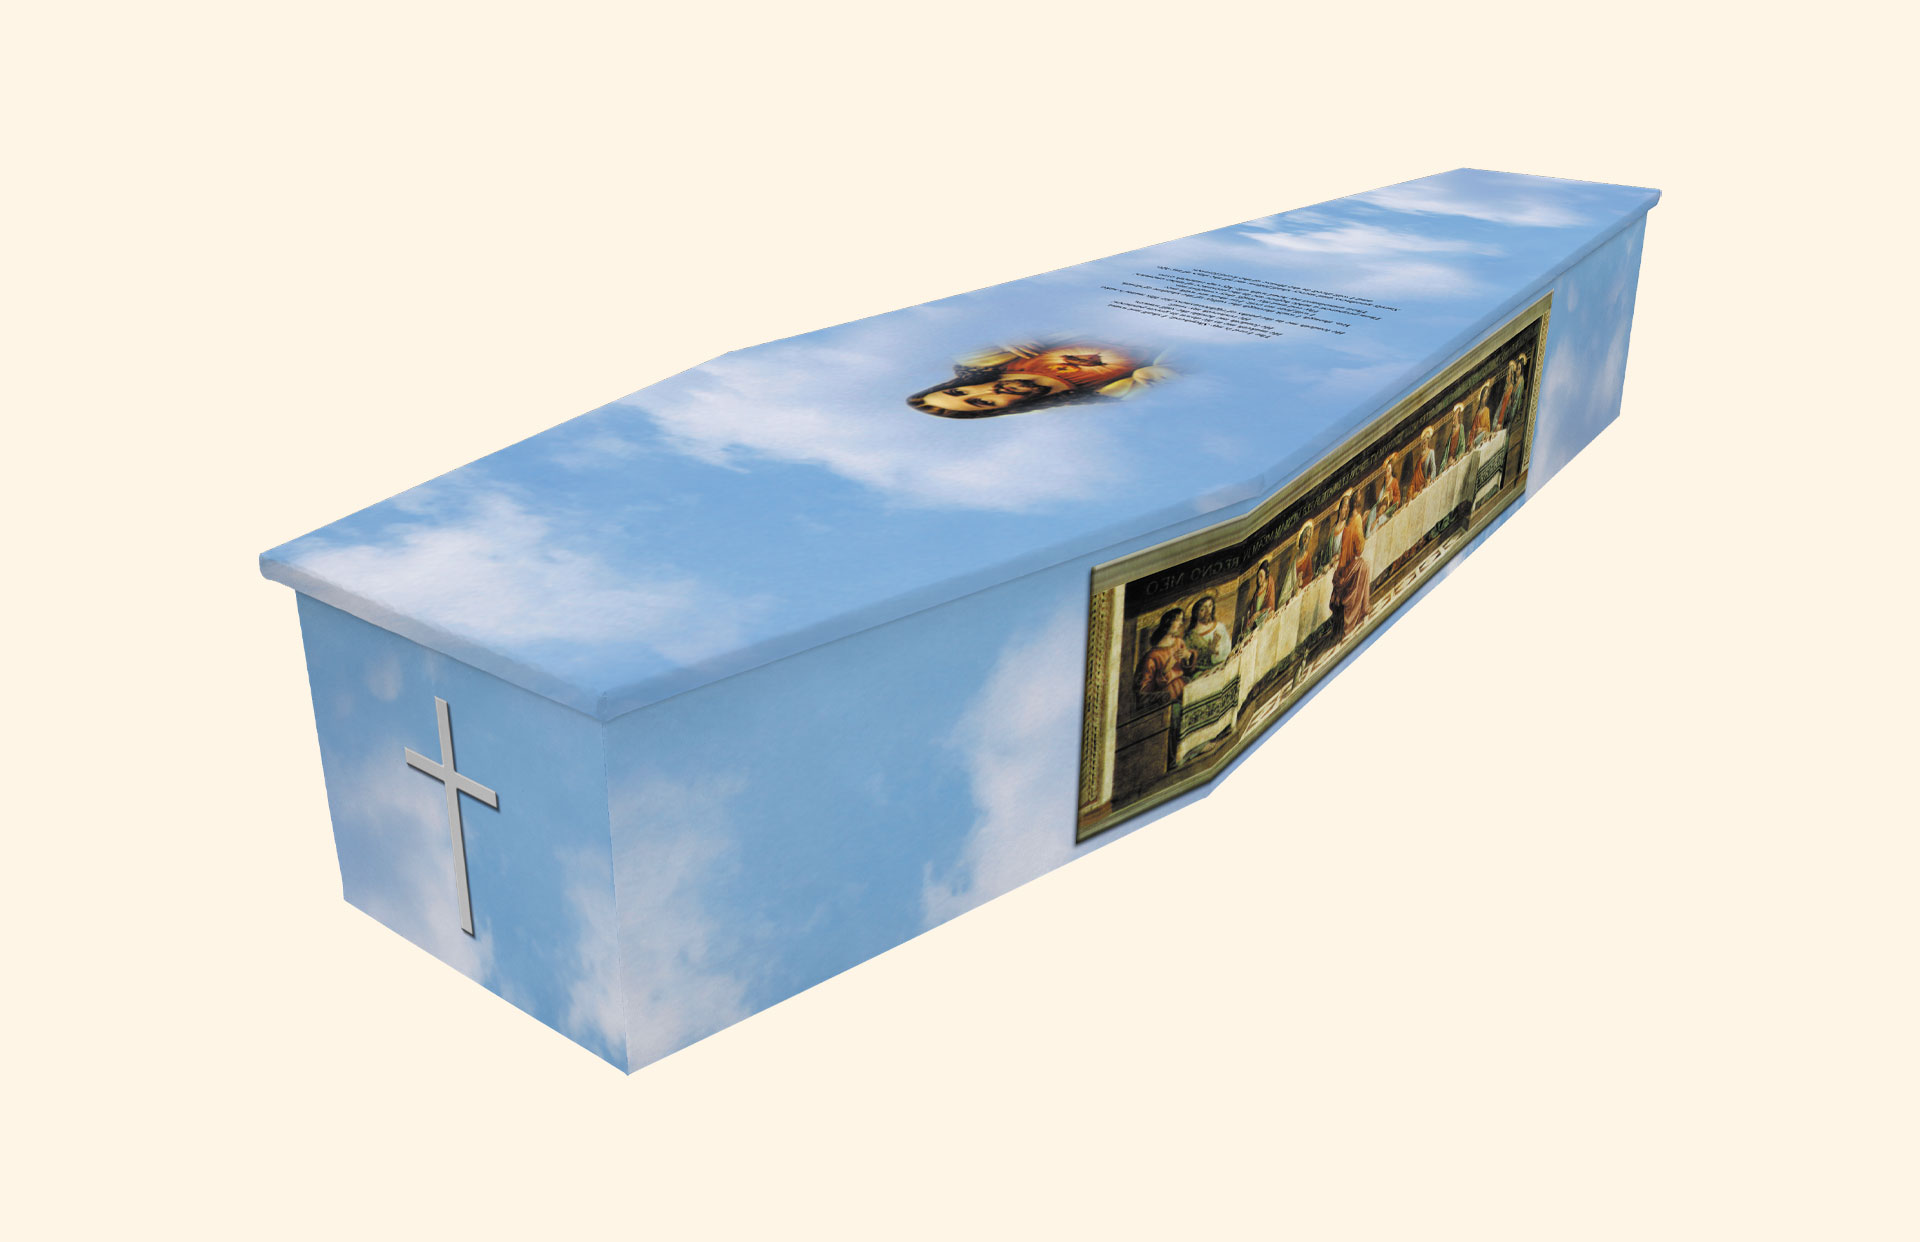 Last Supper 23rd Psalm design on a cardboard coffin